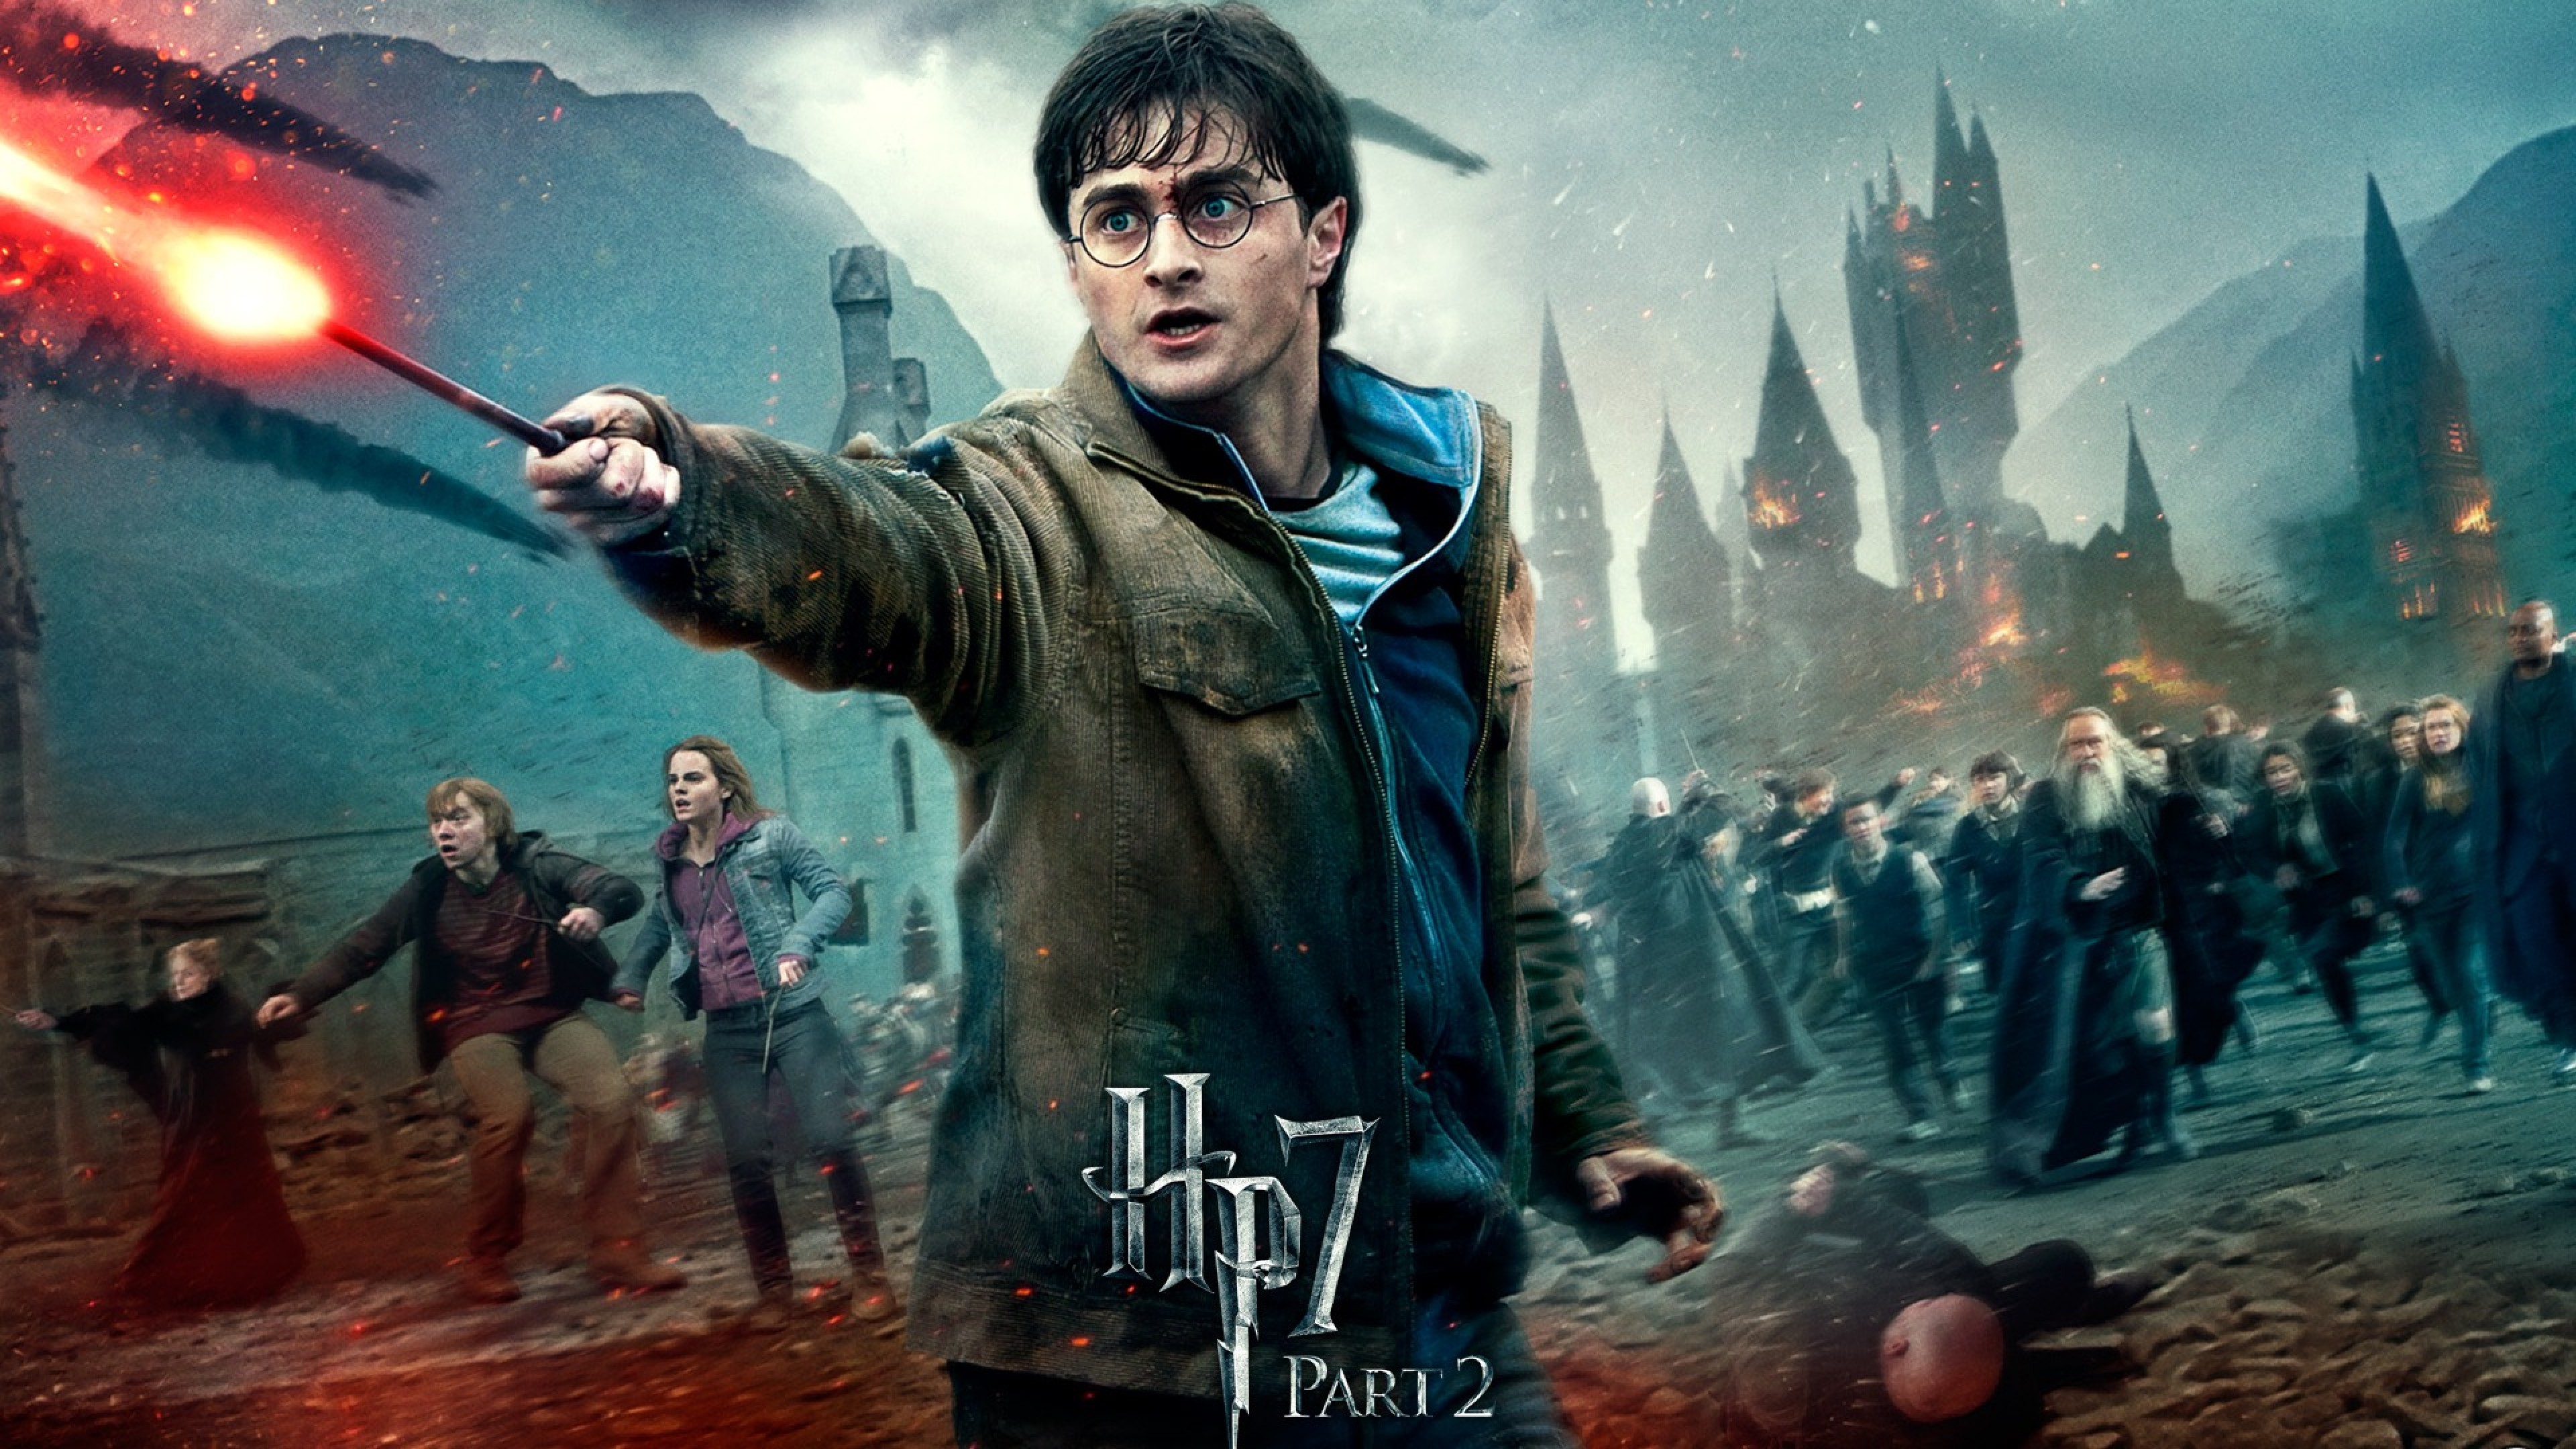 Harry Potter Deathly Hallows Part 2 Hd Wallpaper for Desktop and Mobiles 4K  Ultra HD - HD Wallpaper 